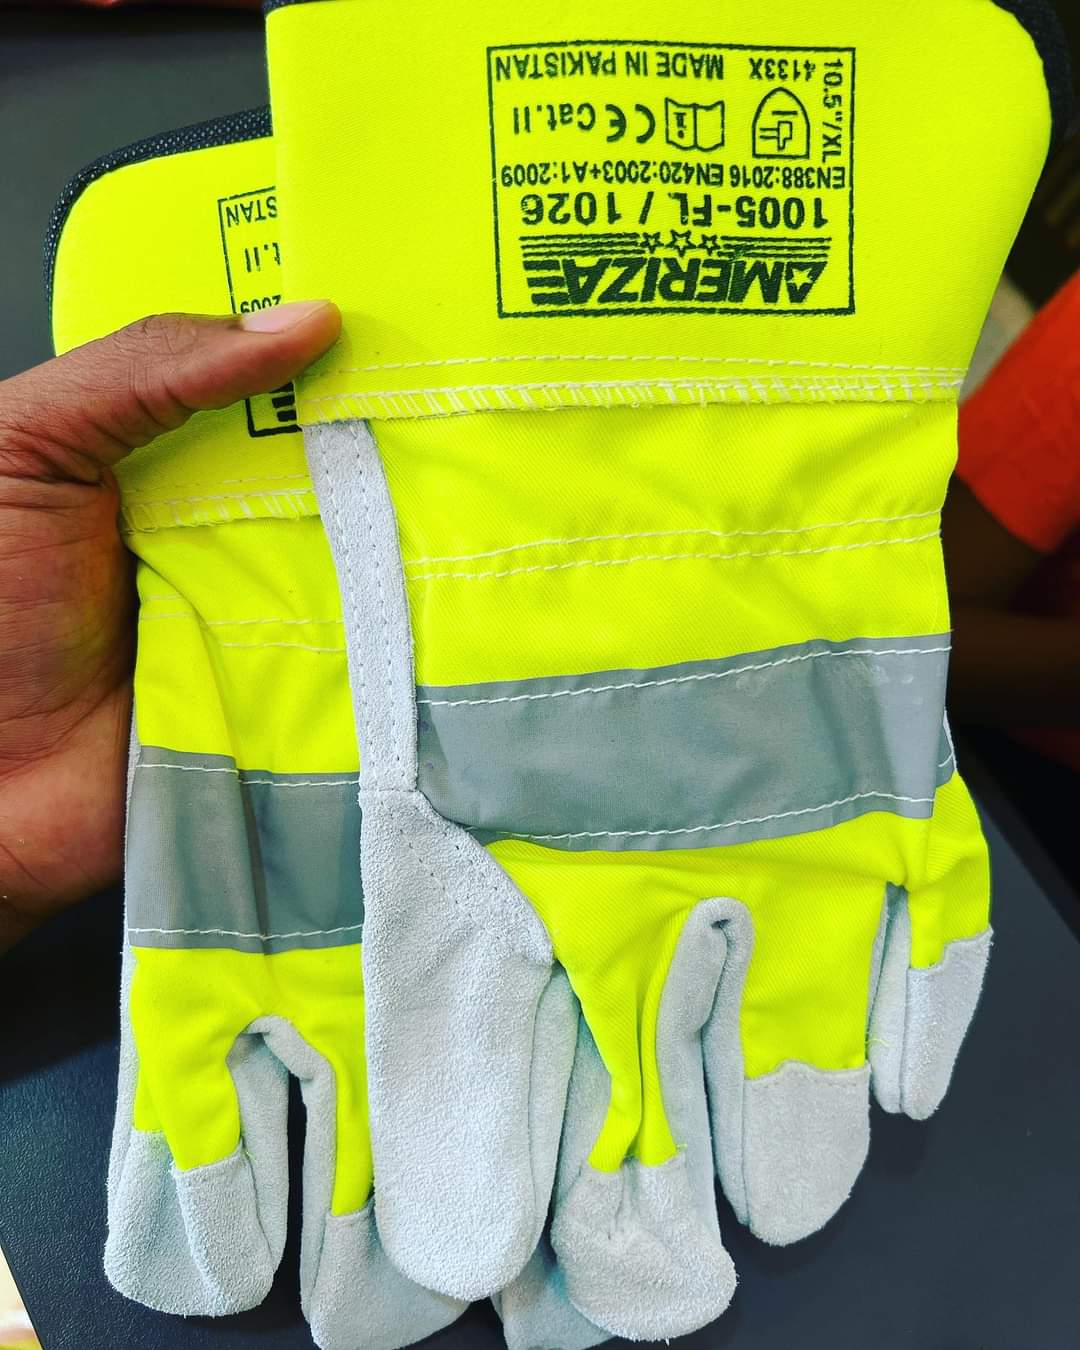 Safety gloves 